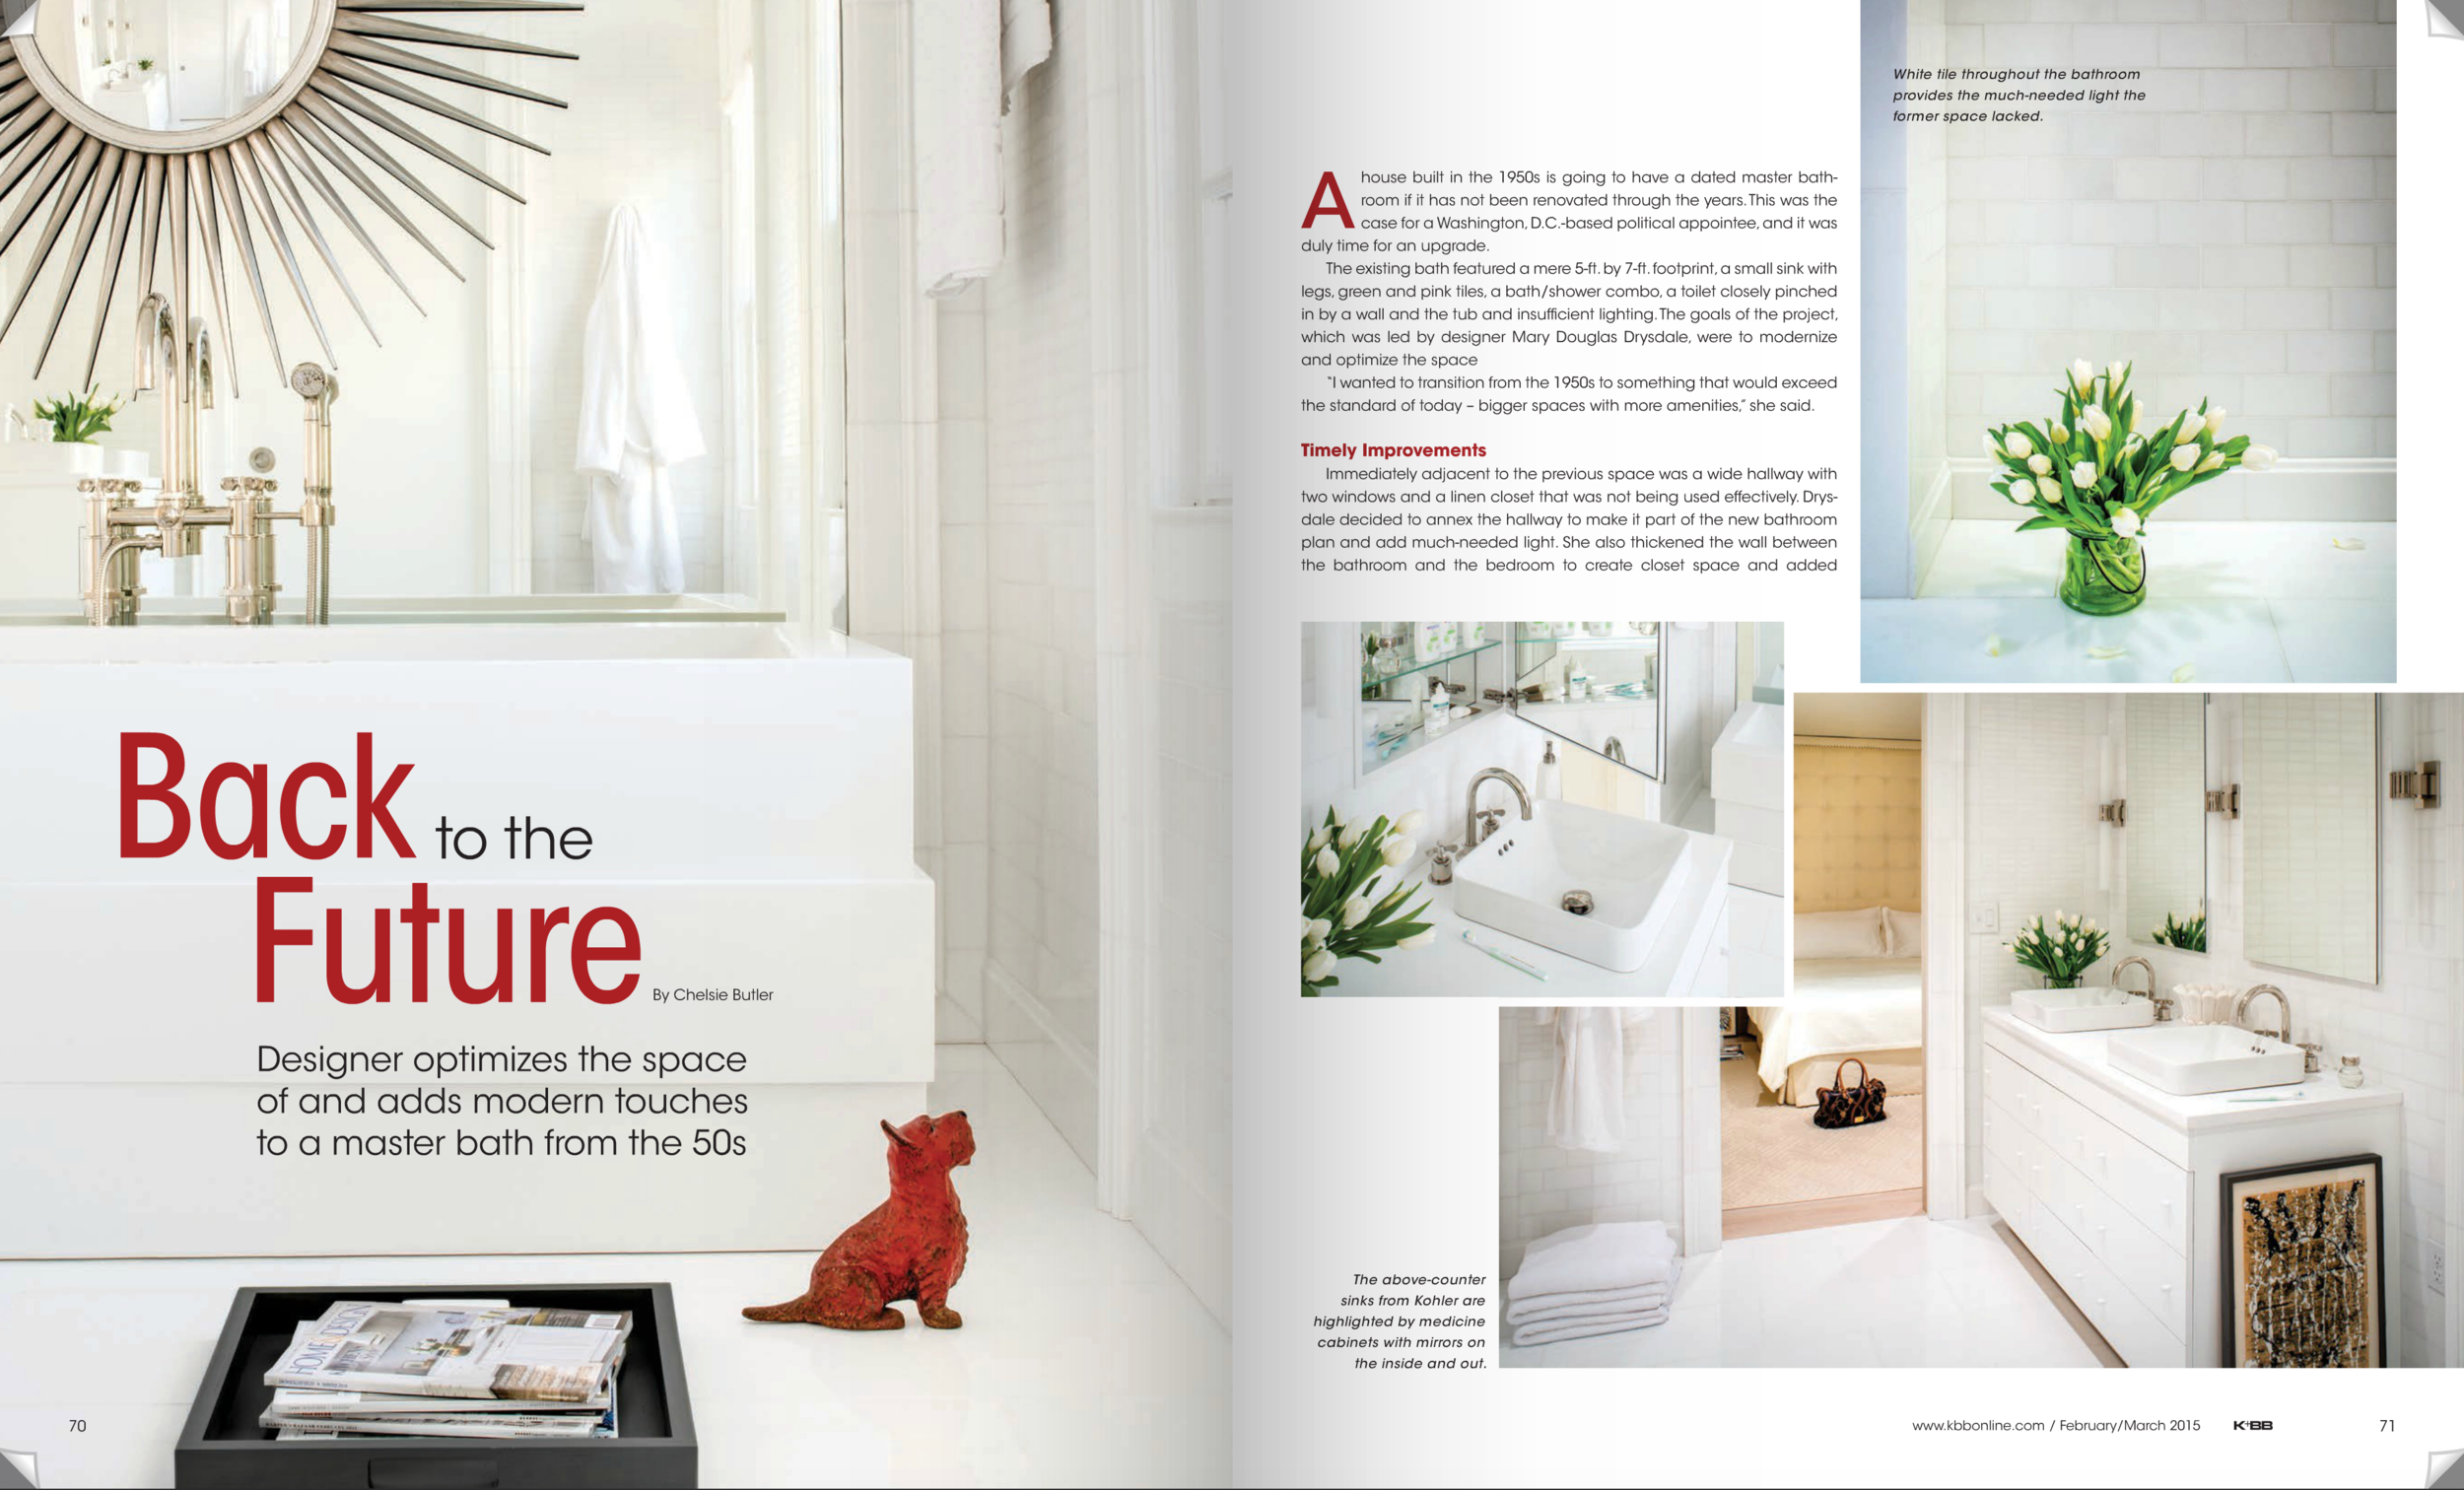   Kitchen &amp; Bath Business Magazine  February/March 2015 Issue Drysdale Design Associates 